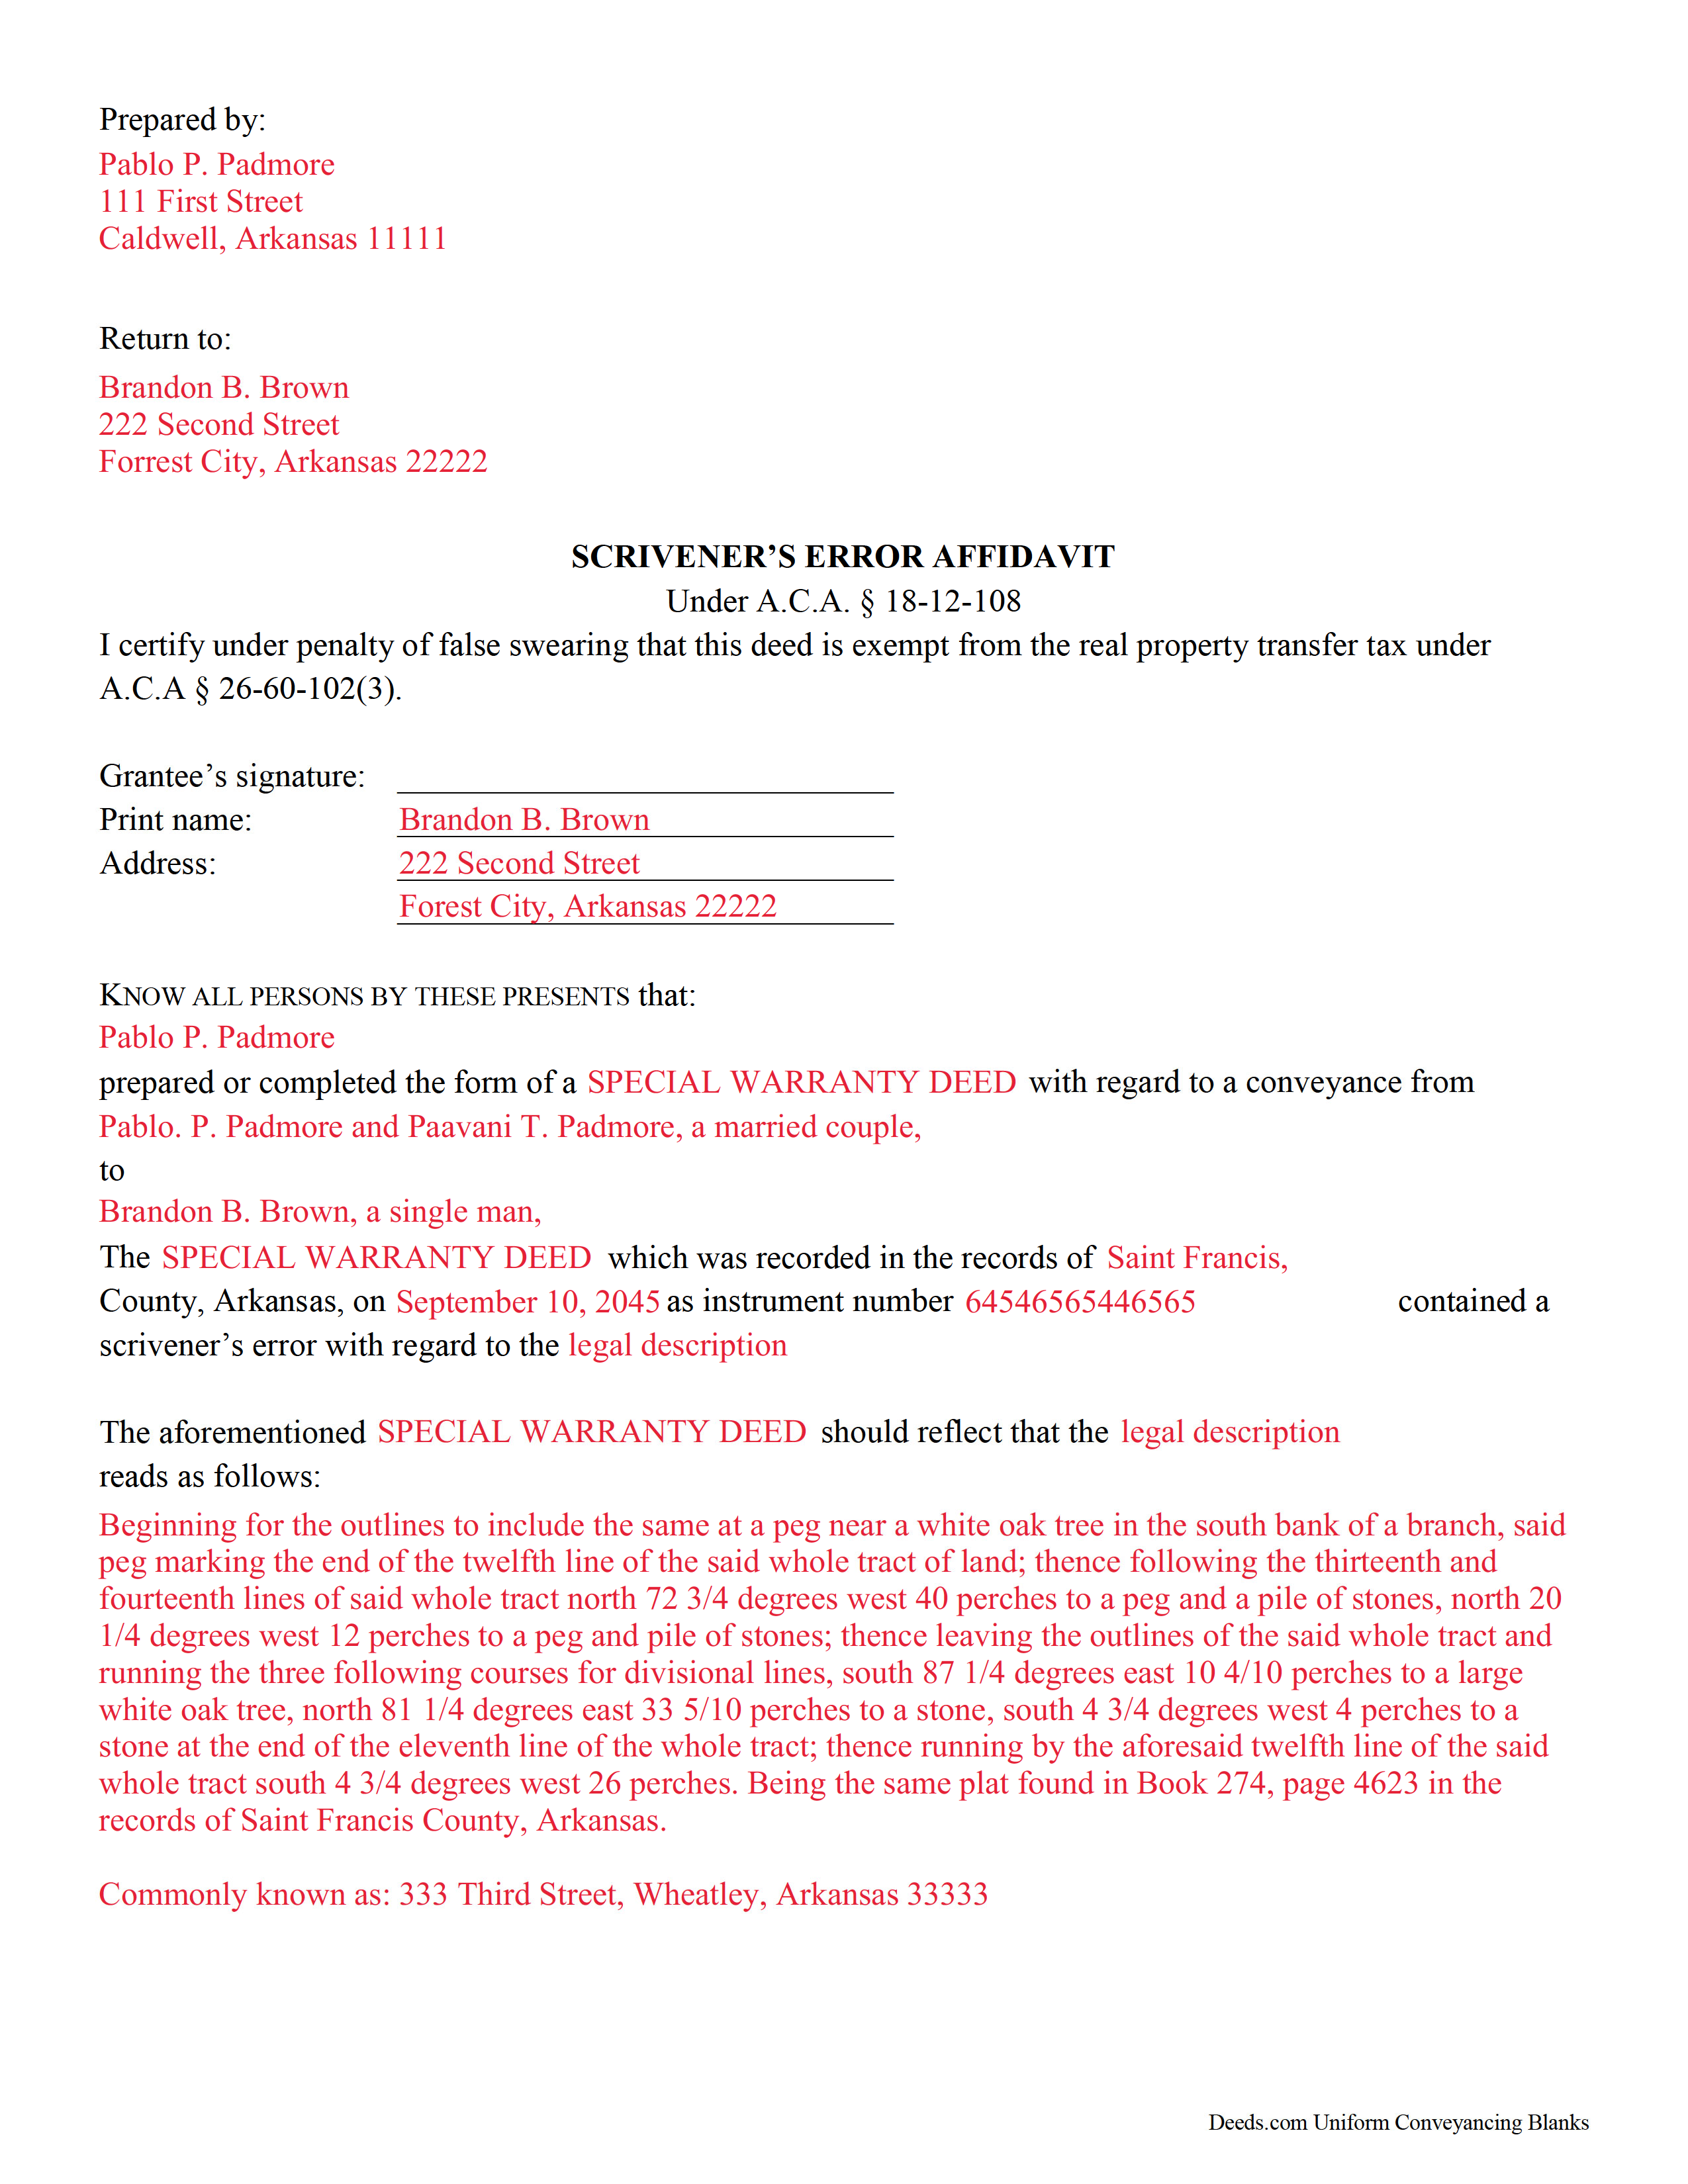 Completed Example of the Scrivener's Error Affidavit Document